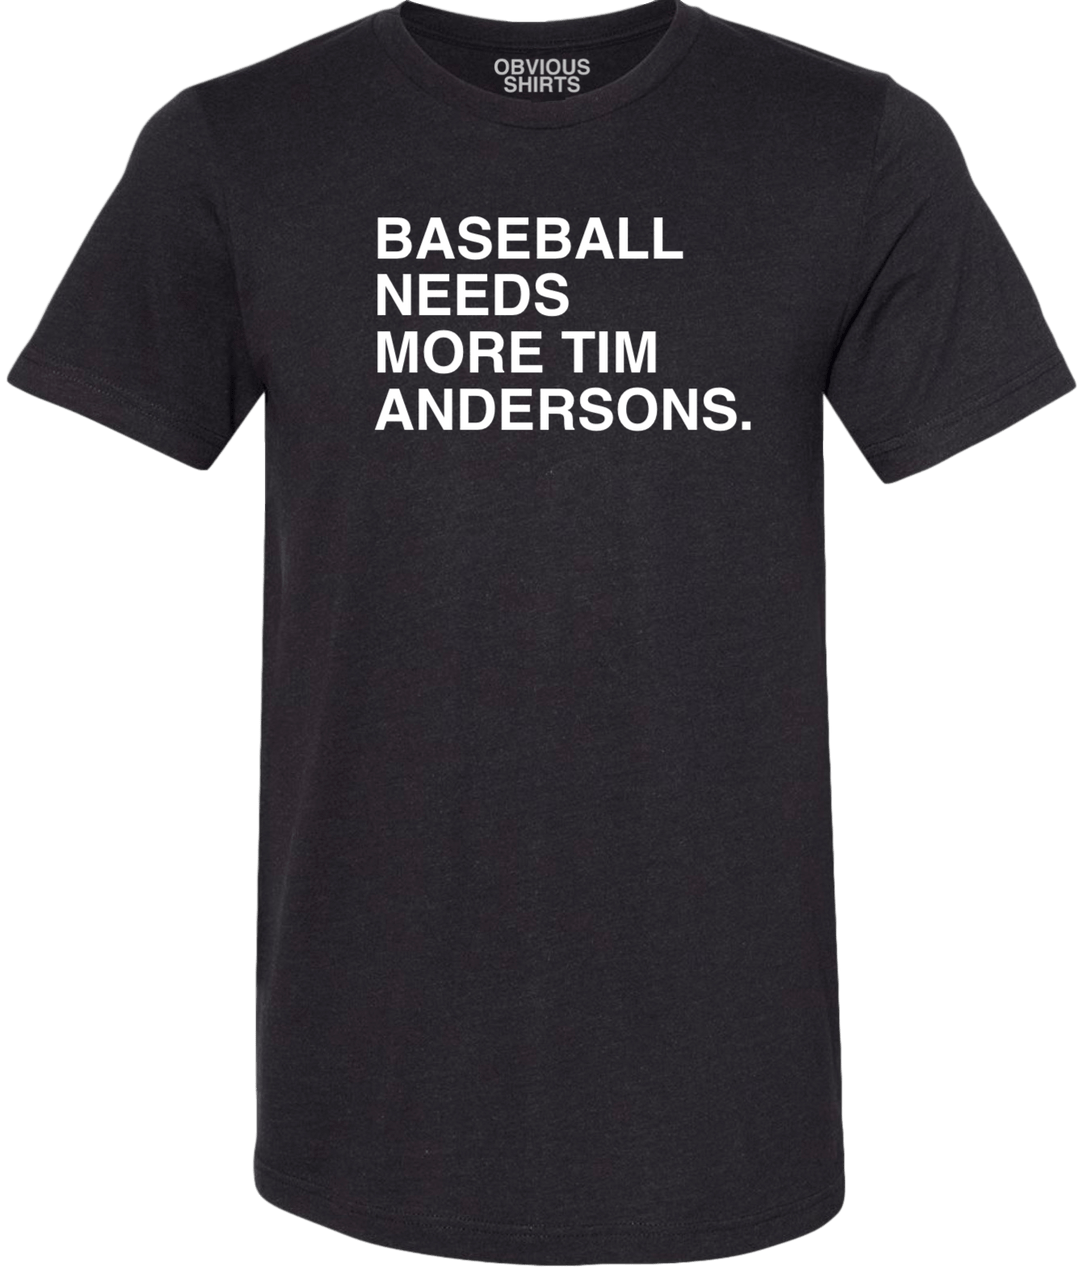 BASEBALL NEEDS MORE TIM ANDERSONS. - OBVIOUS SHIRTS.